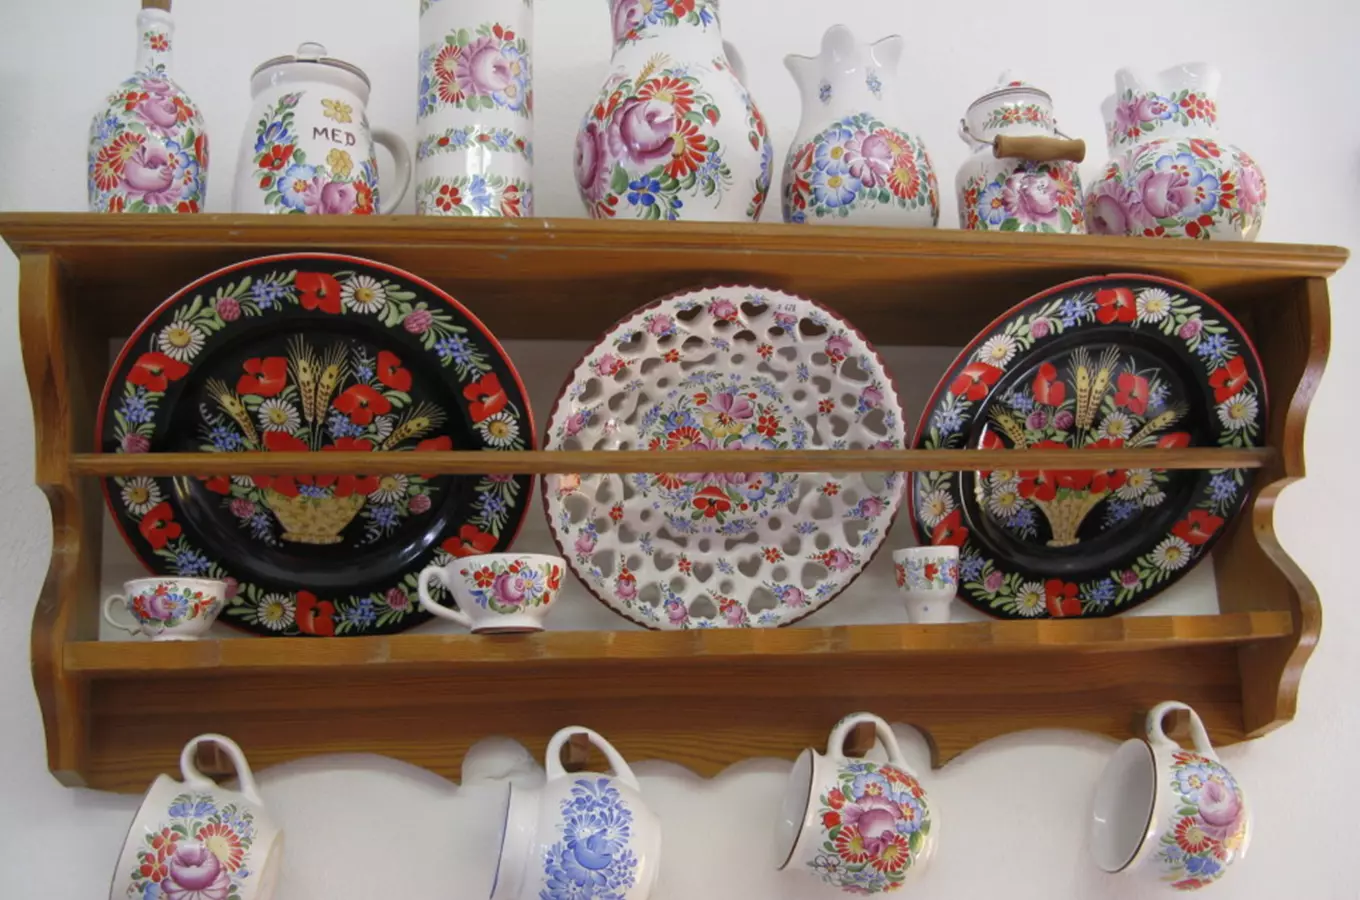 Ketty keramika - chodská dekorační keramika